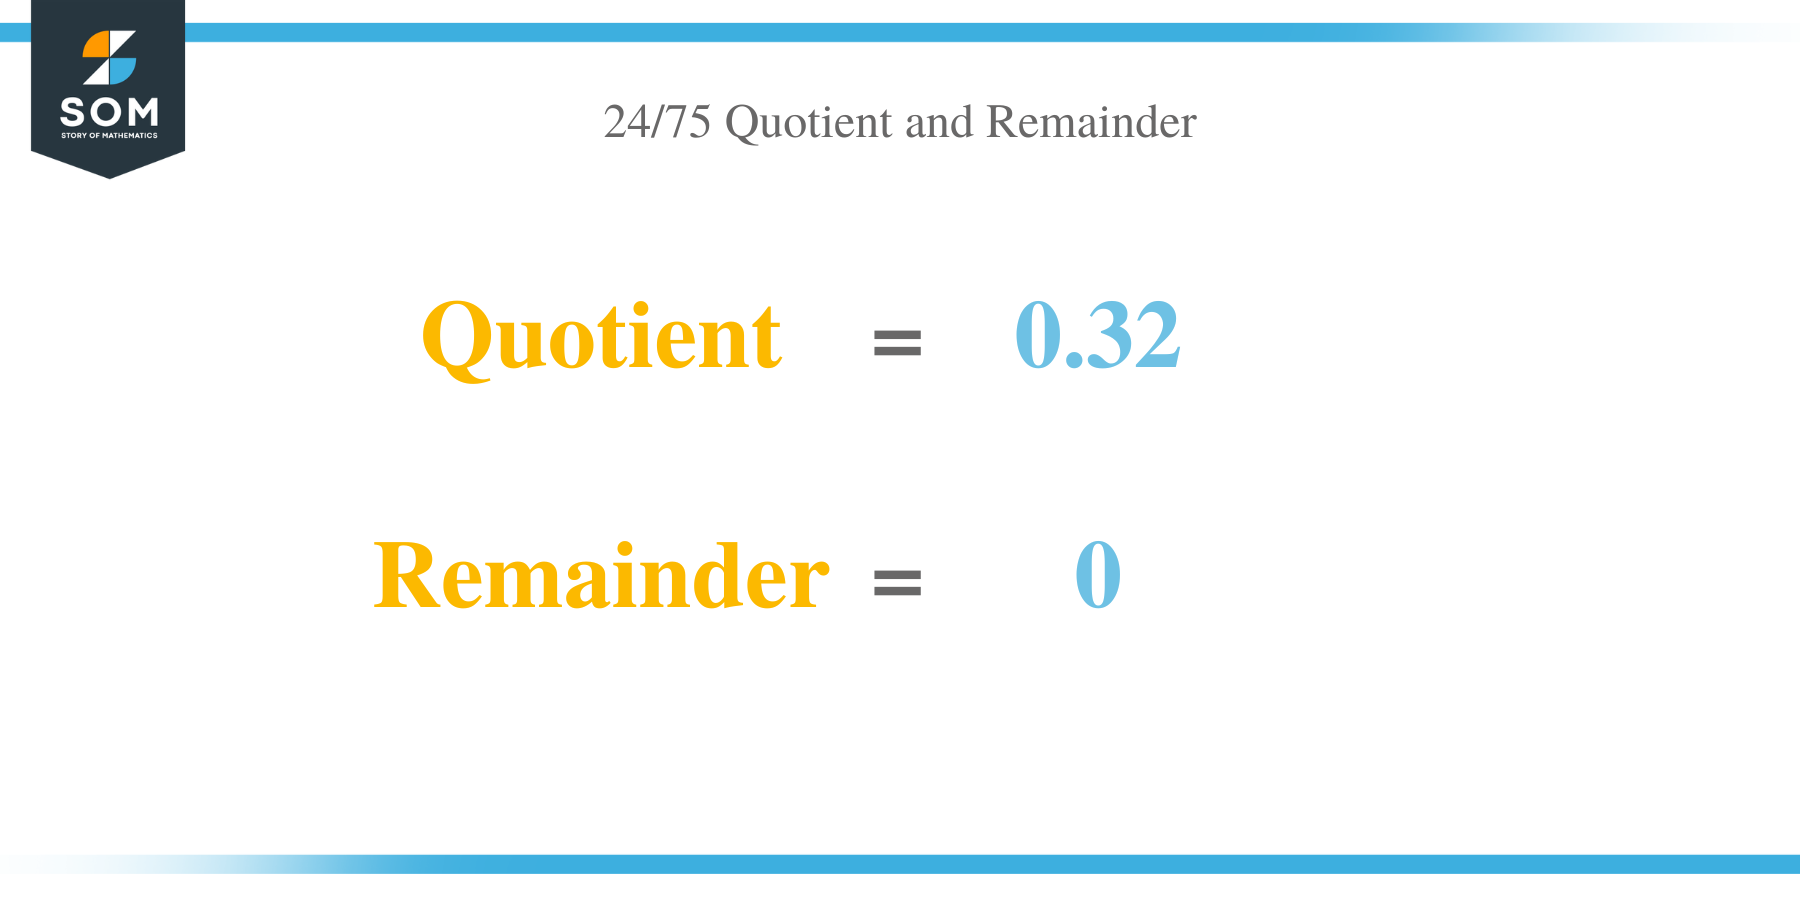 Quotient and Remainder of 24 per 75